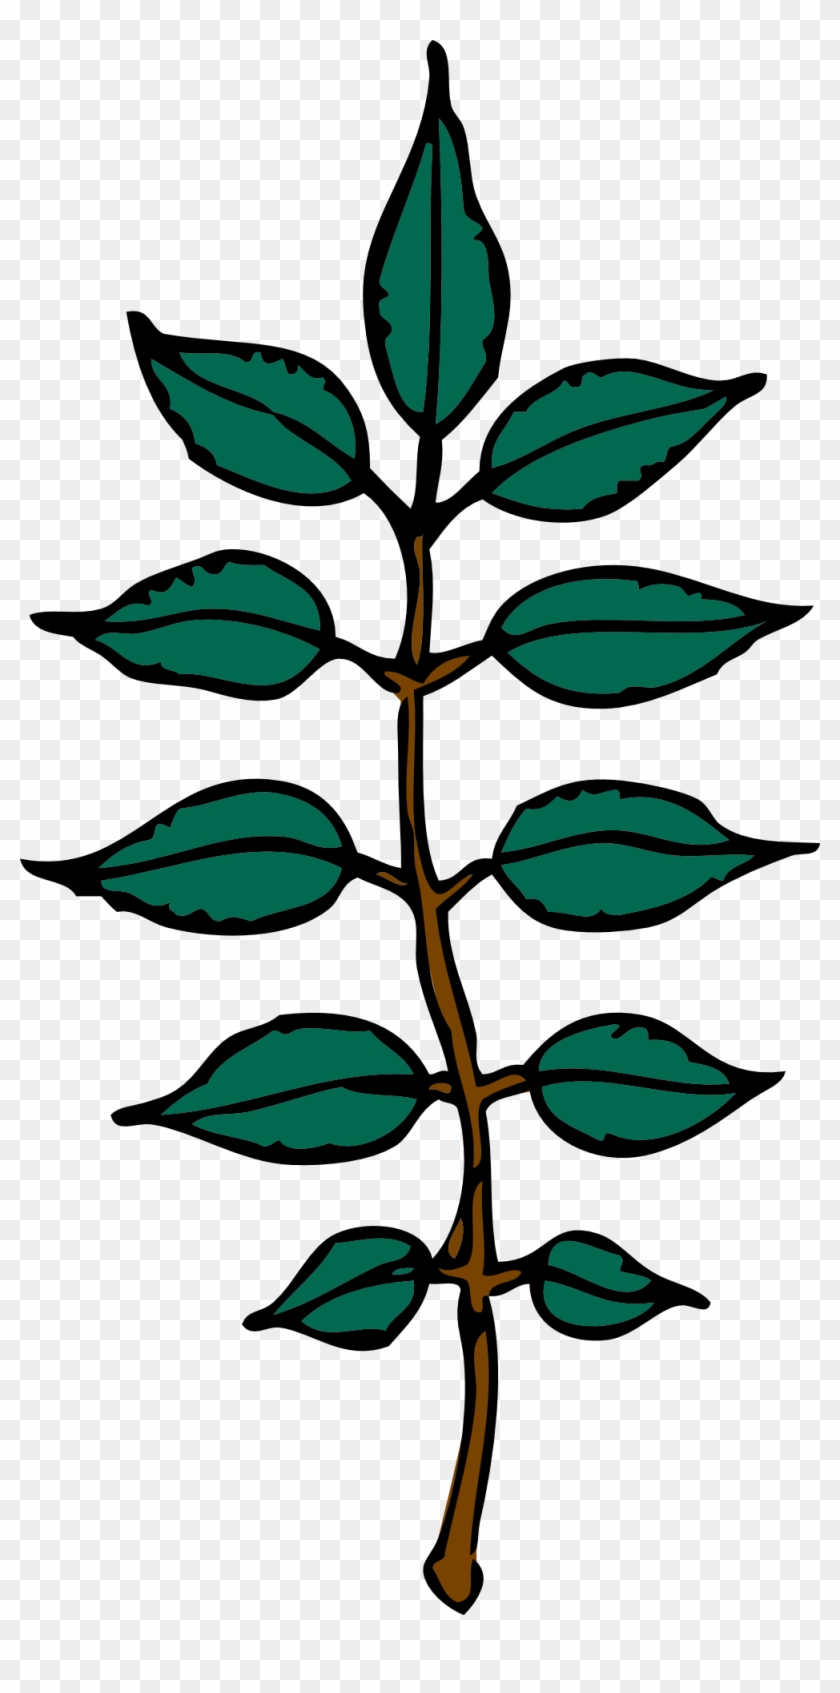 Free Vector Ash Leaves Clip Art - Ash Tree Leaf Clip Art #26811